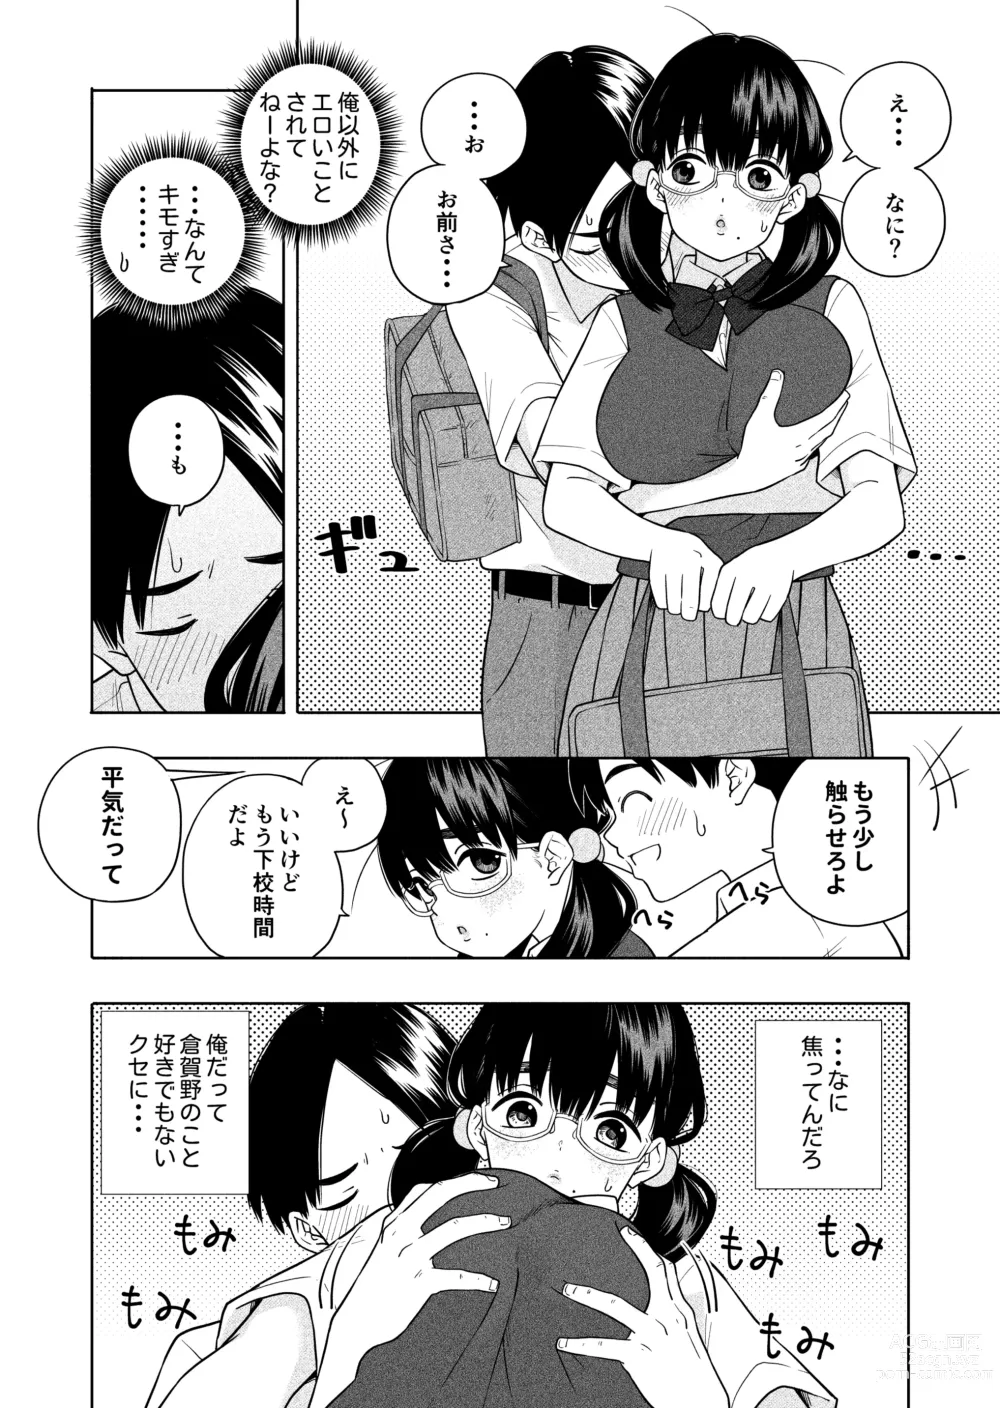 Page 12 of doujinshi Hoshikute, Motomete.